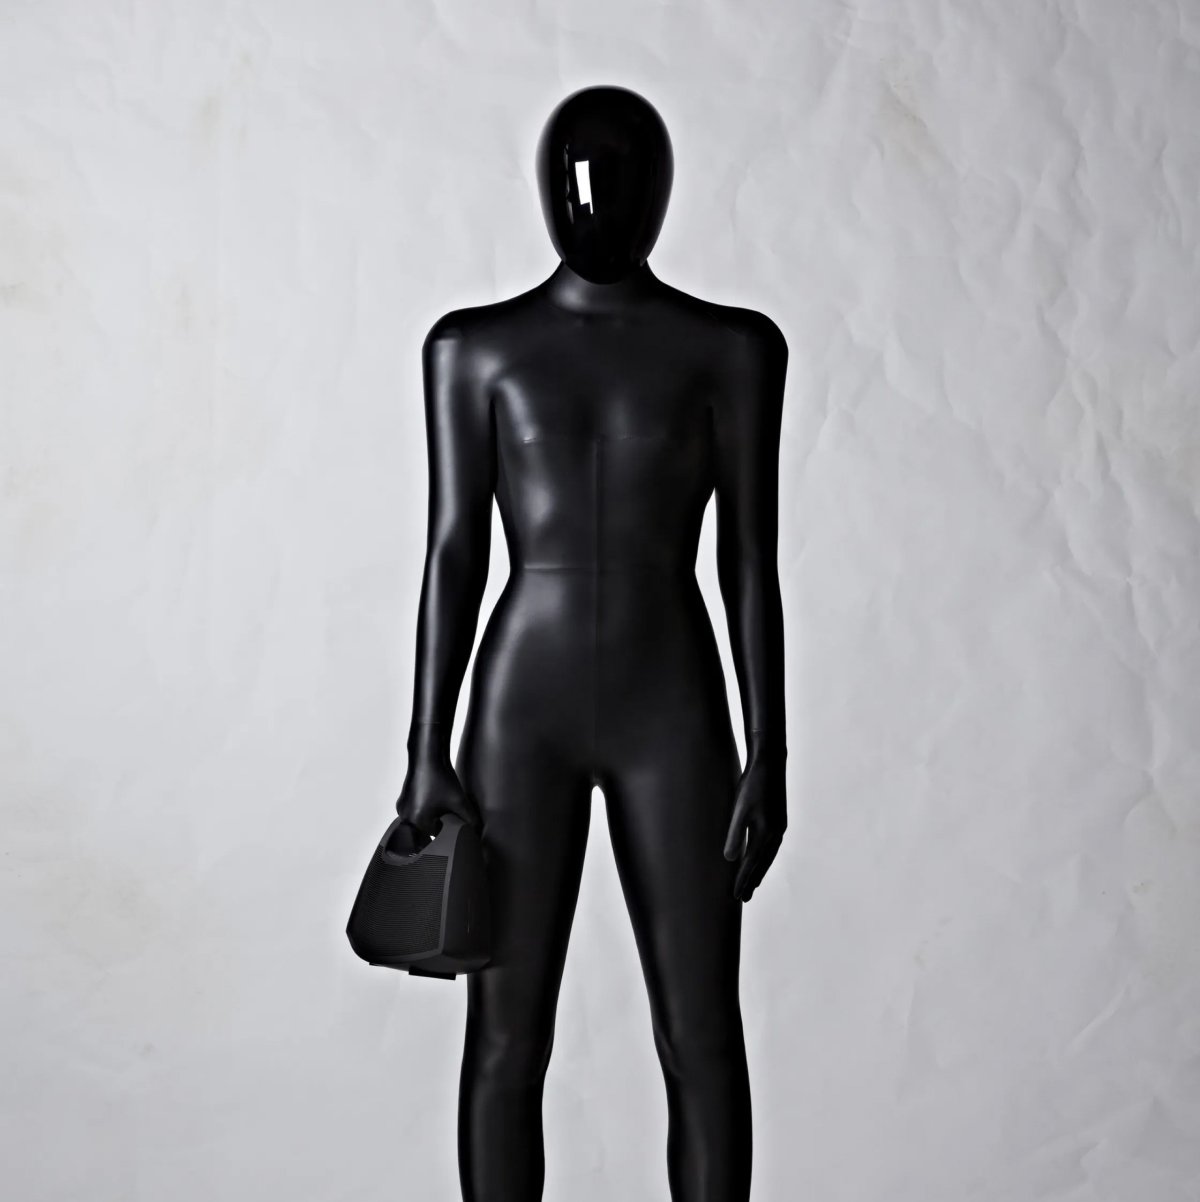 Fashion Sketchbook Figure Template: 455 Large Female Figure